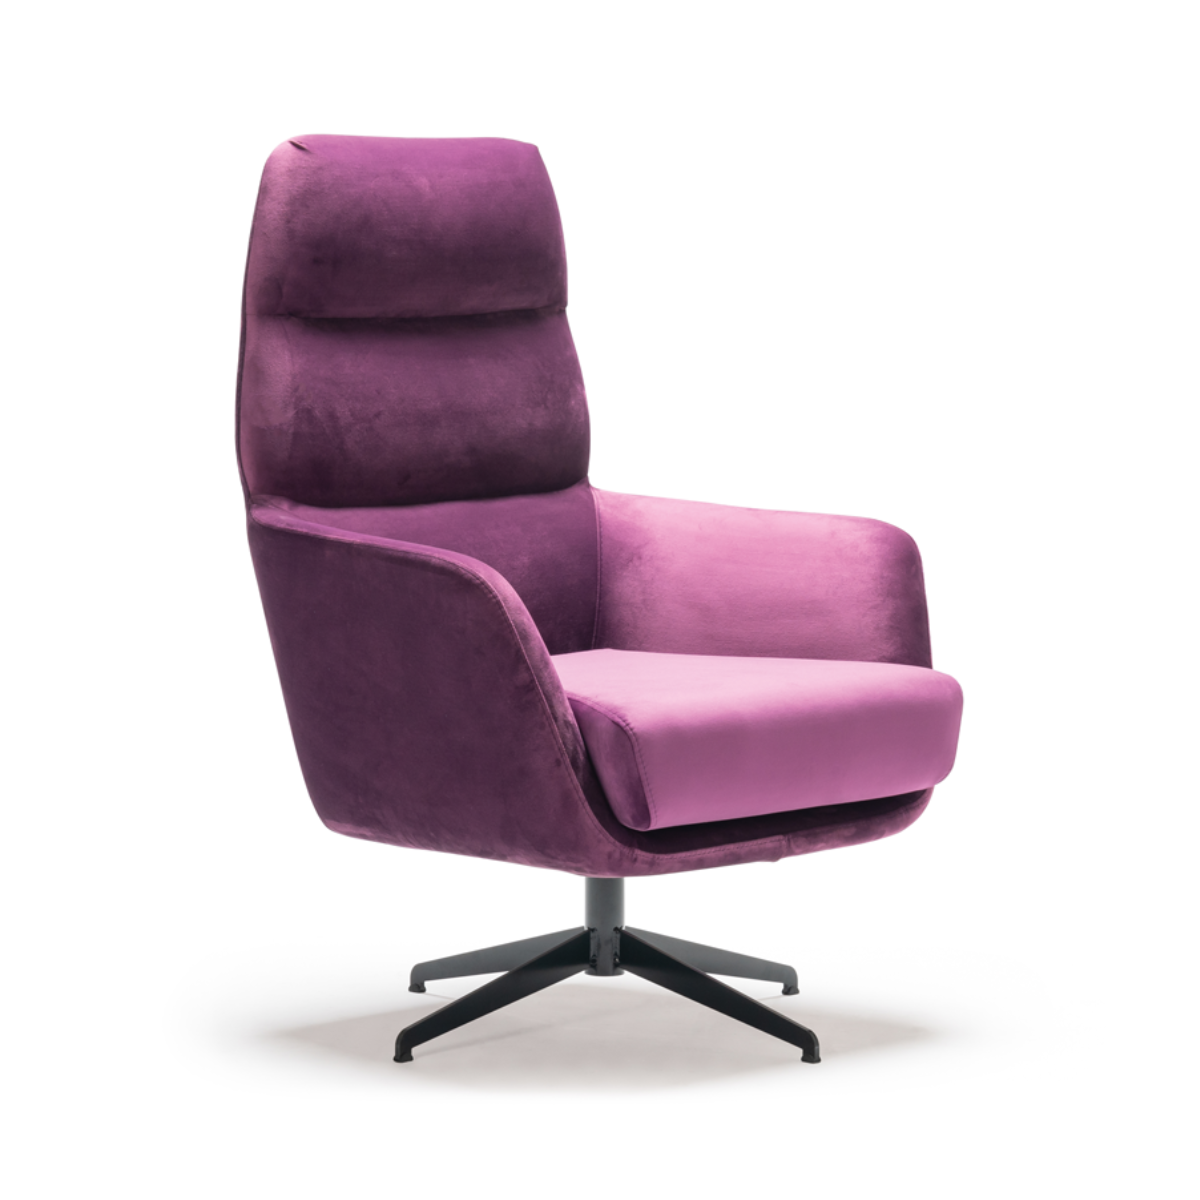 Affori Lounge Chair